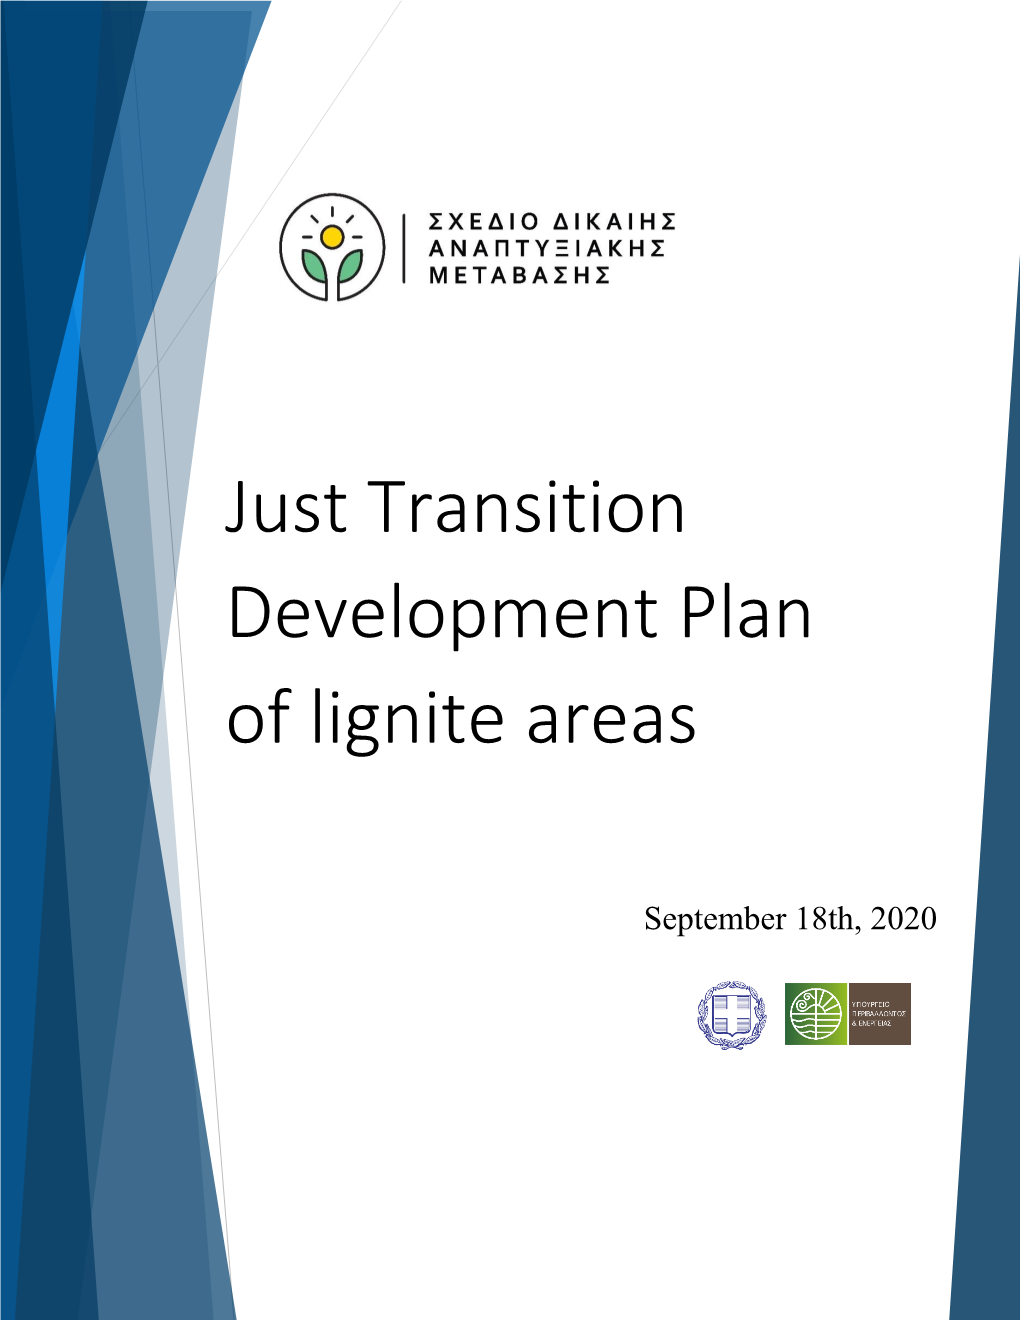 Just Transition Development Plan of Lignite Areas